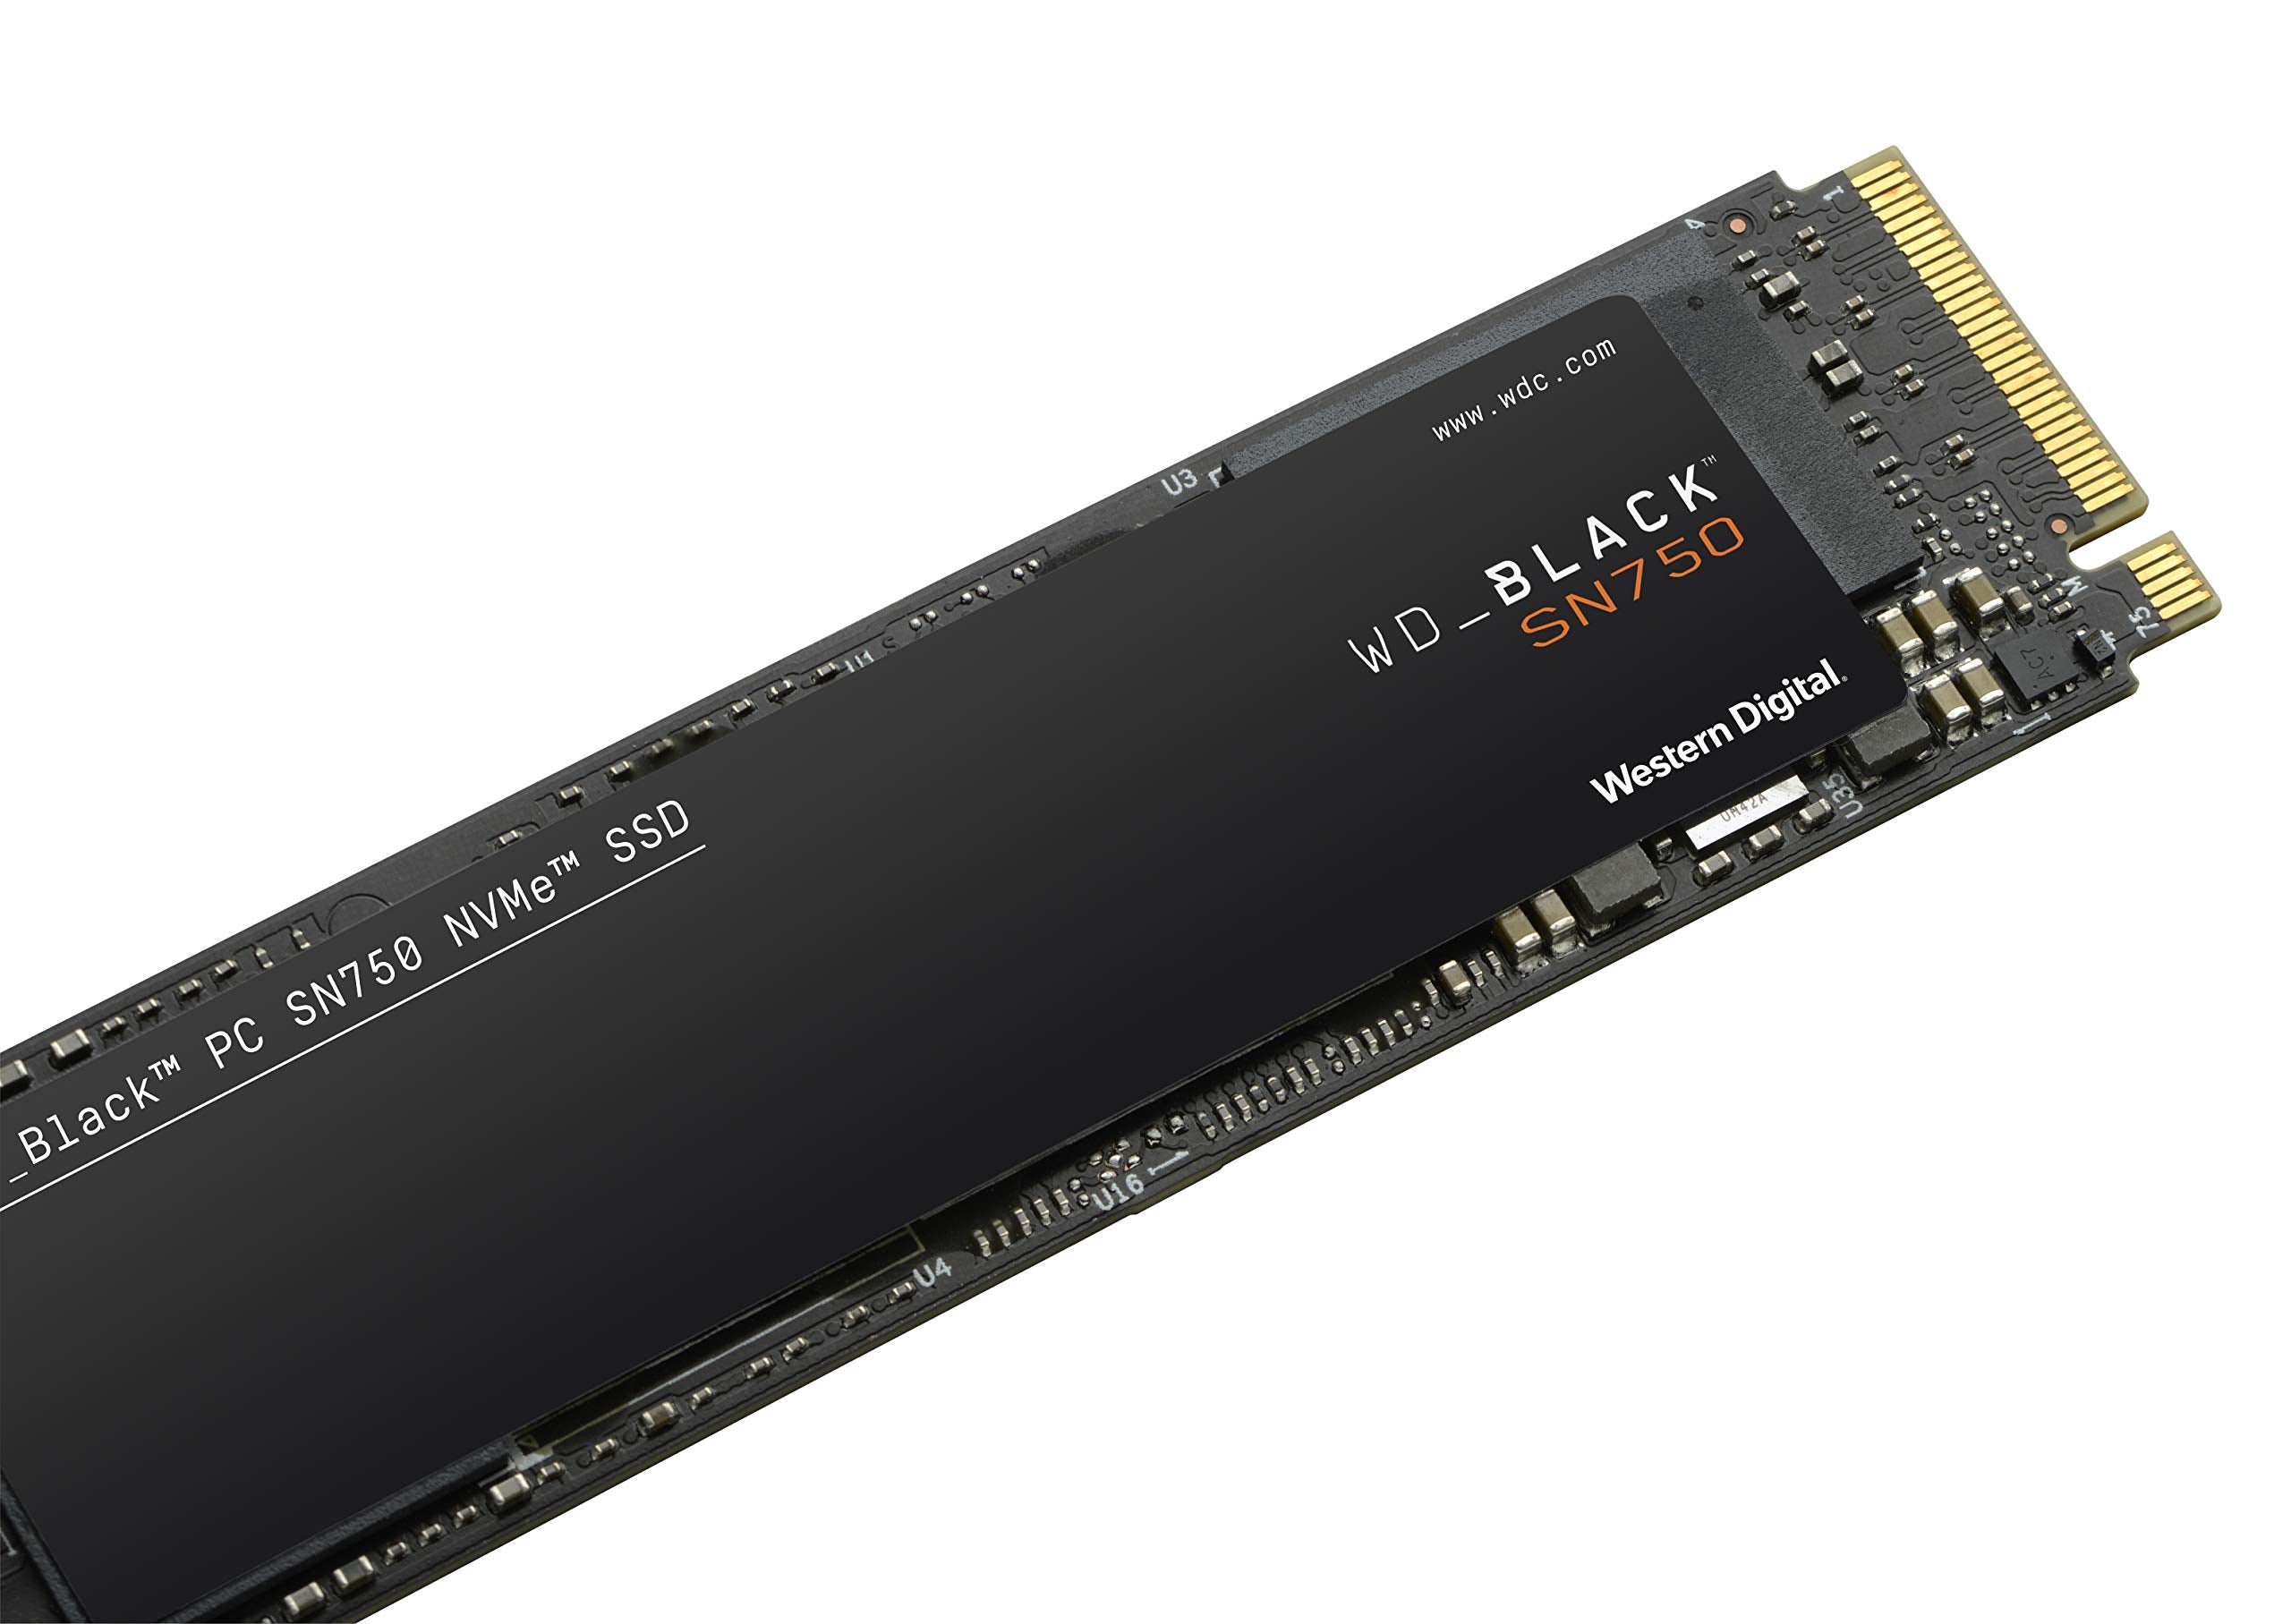 WD_Black SN750 1TB NVMe Internal Gaming SSD - Gen3 PCIe, M.2 2280, 3D NAND - WDS100T3X0C